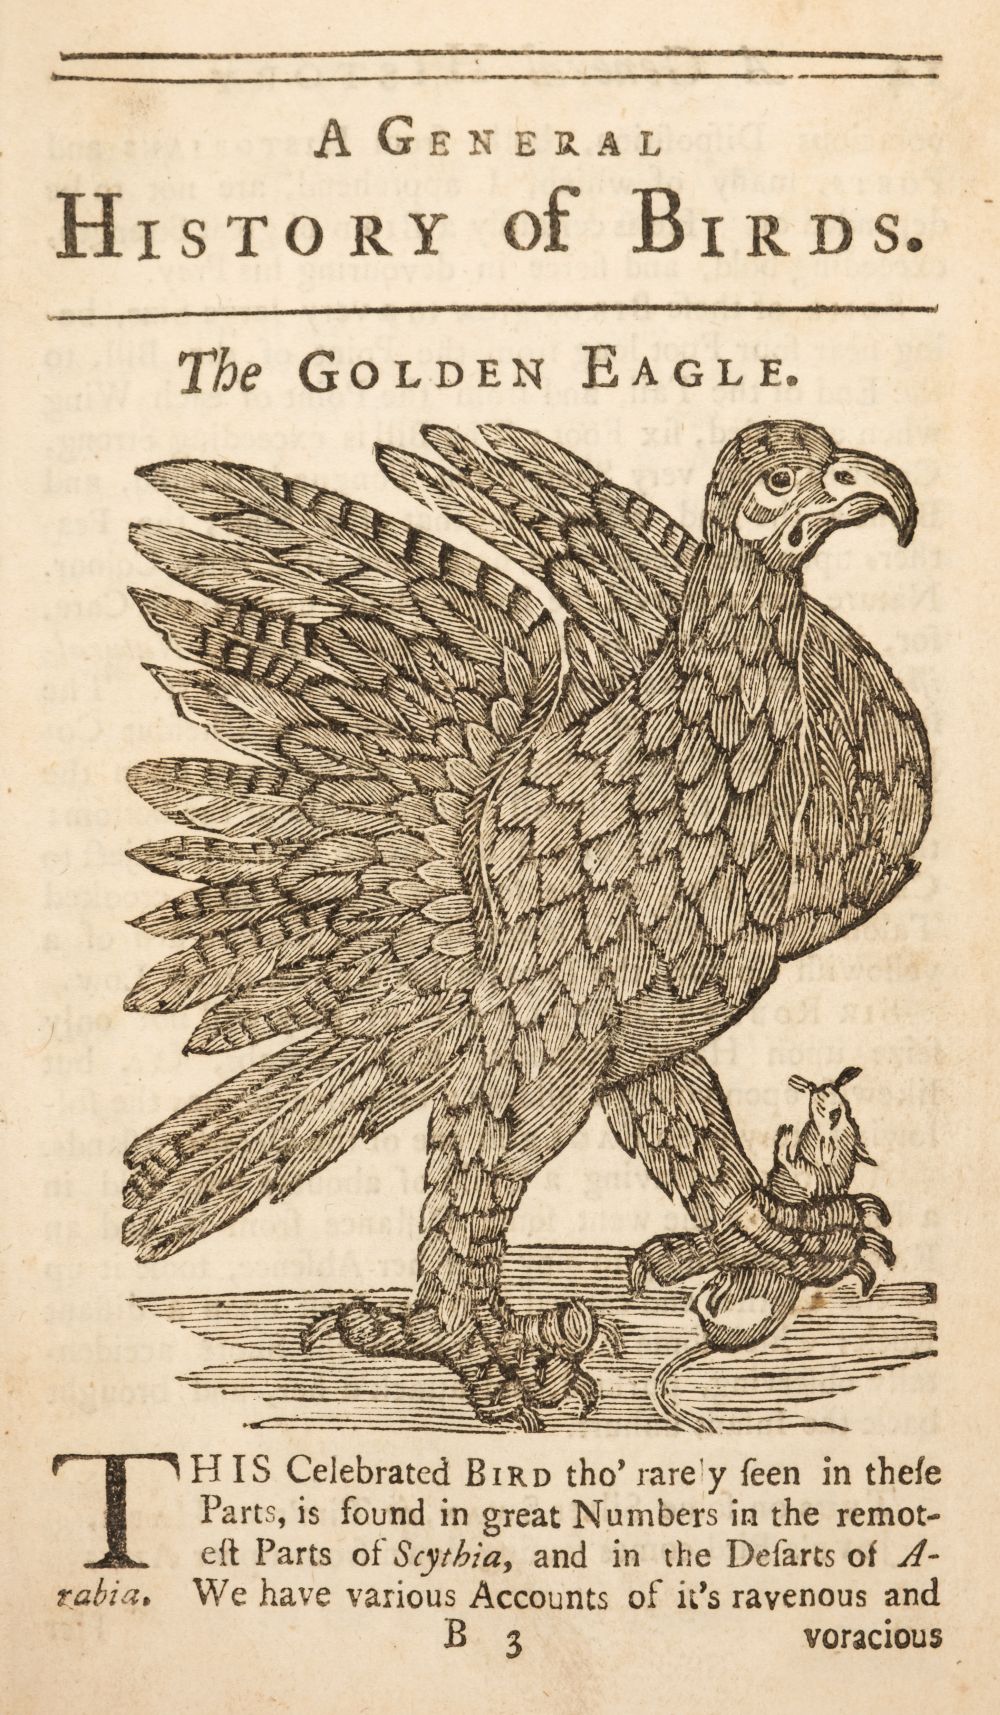 Ornithologia Nova. A New General History of Birds, vol. 1, & Ornithologia Nova, vol. 2, 1745